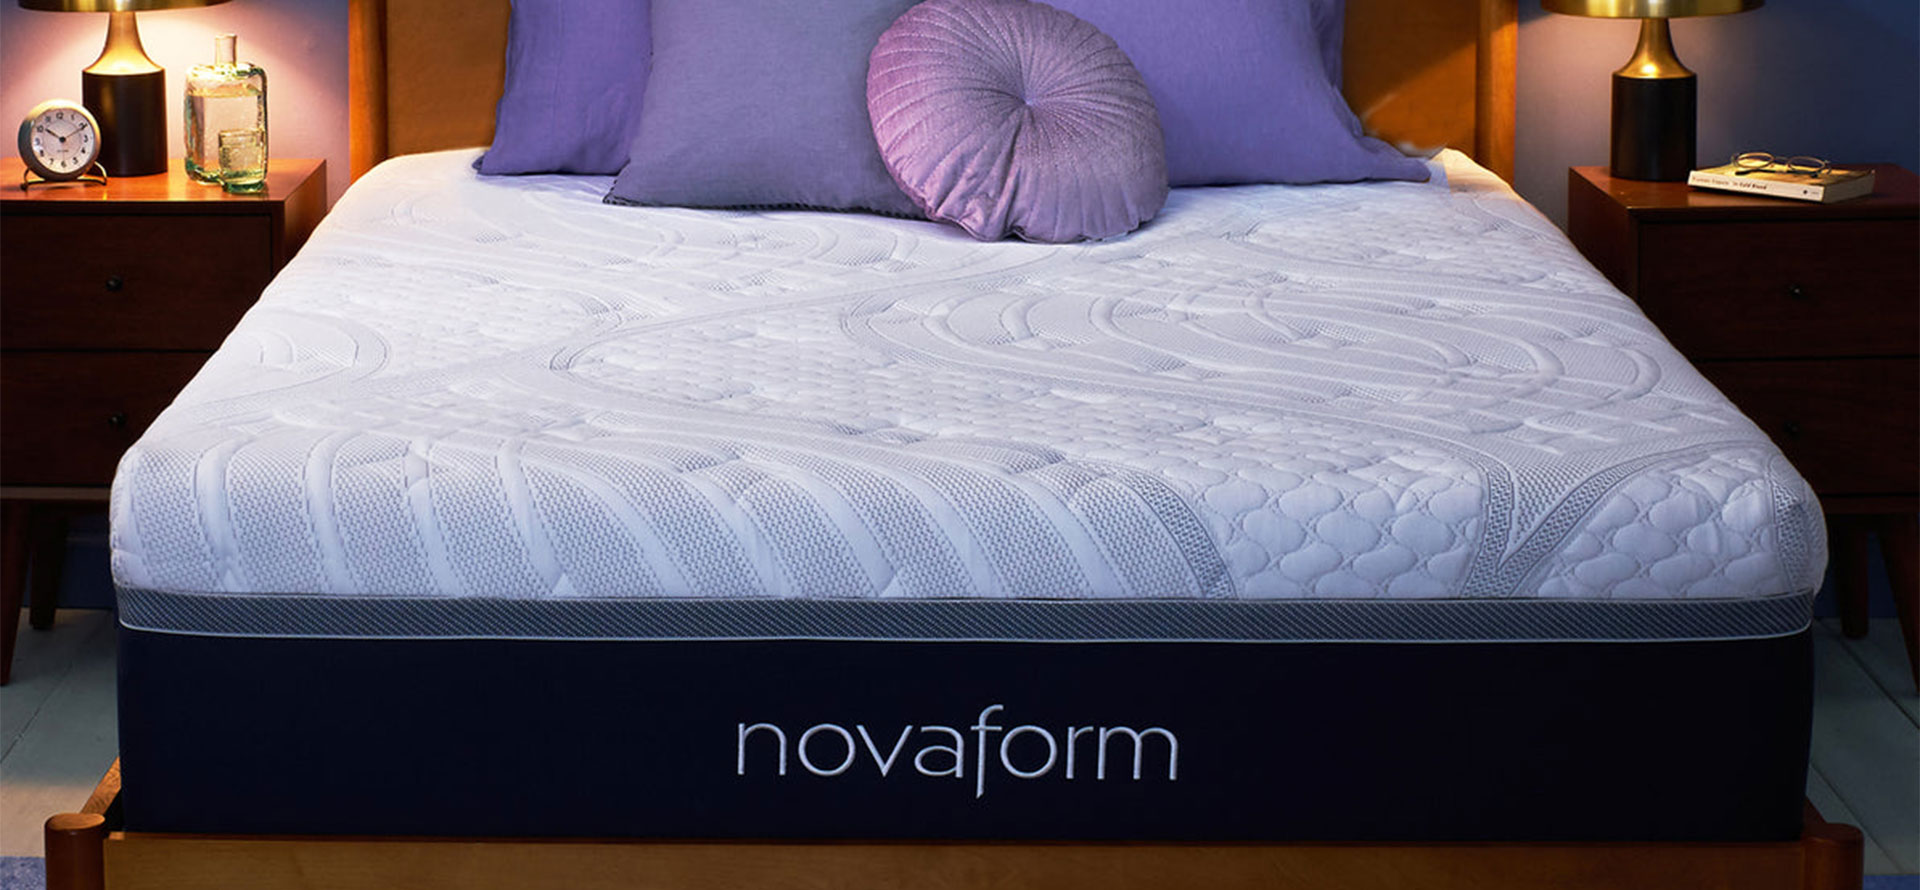 Novaform mattress review.